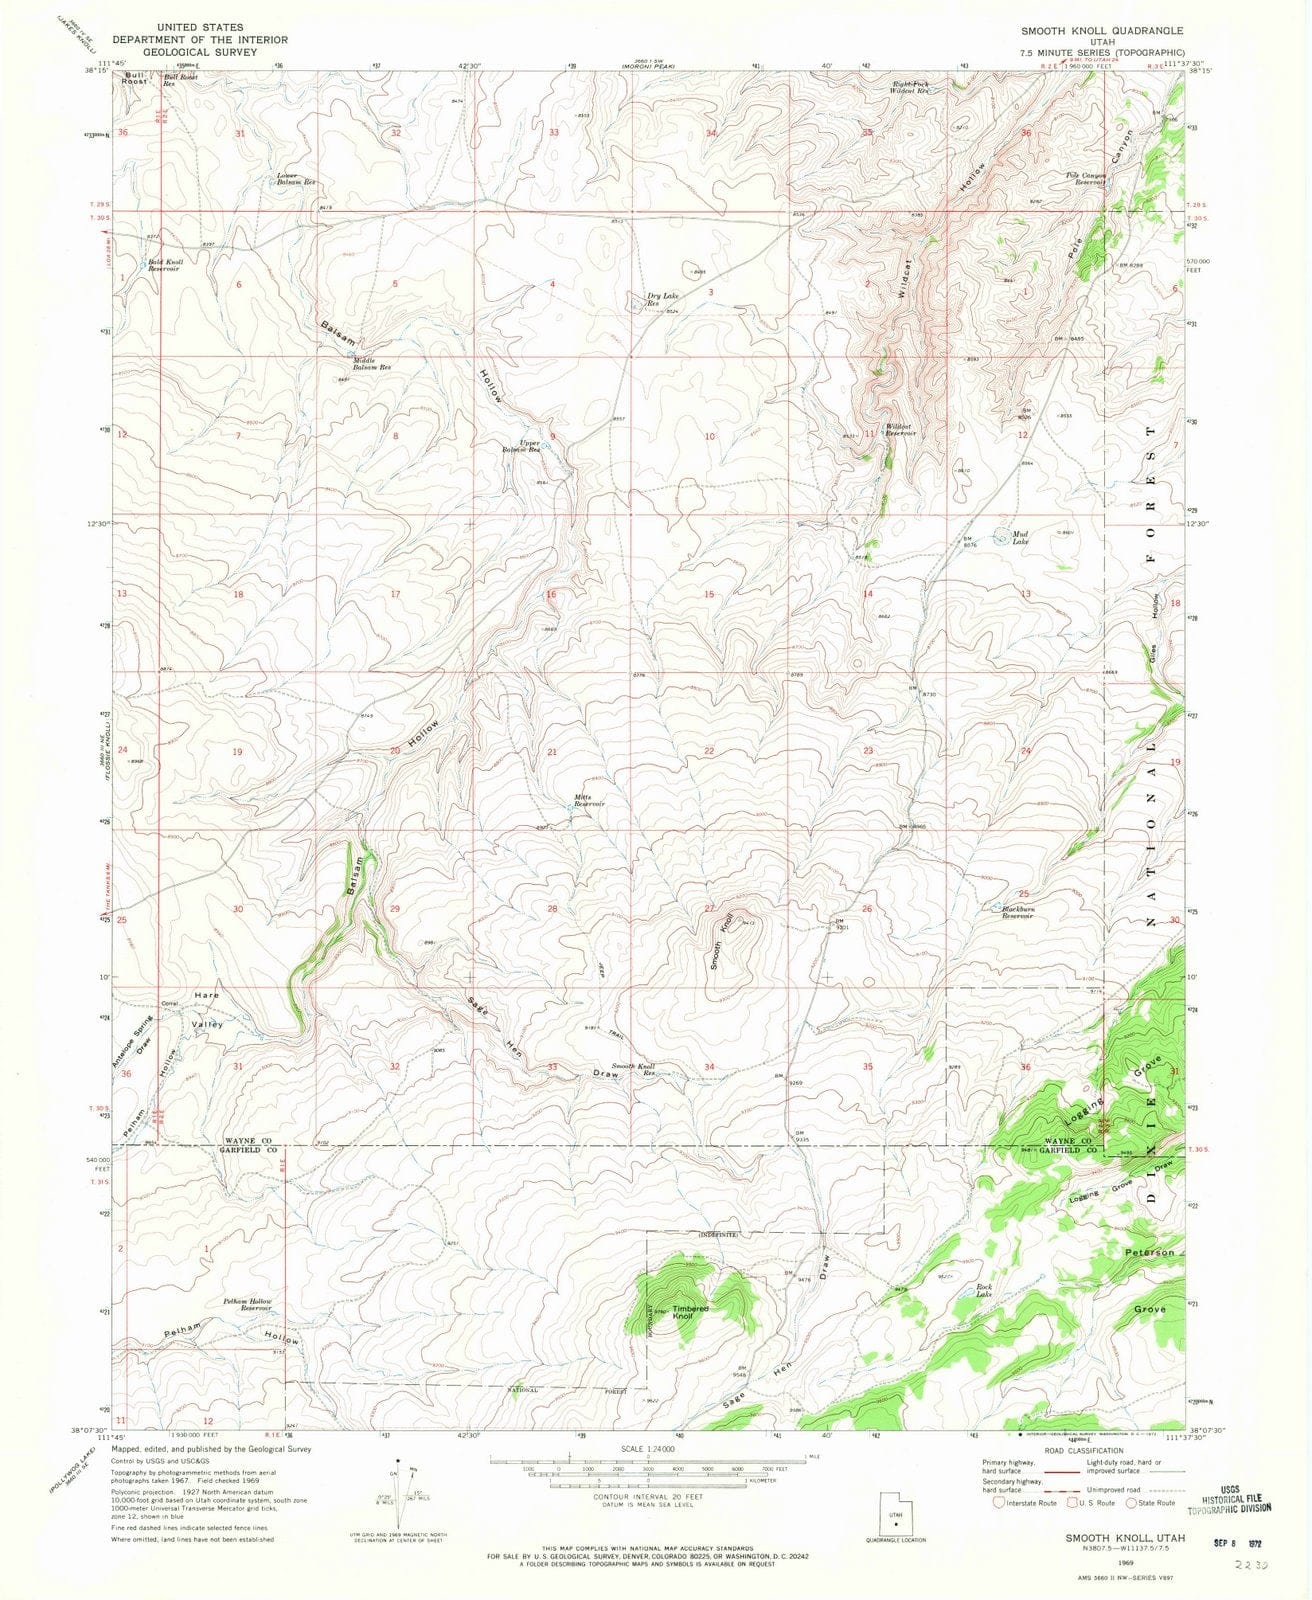 1969 Smooth Knoll, UT - Utah - USGS Topographic Map